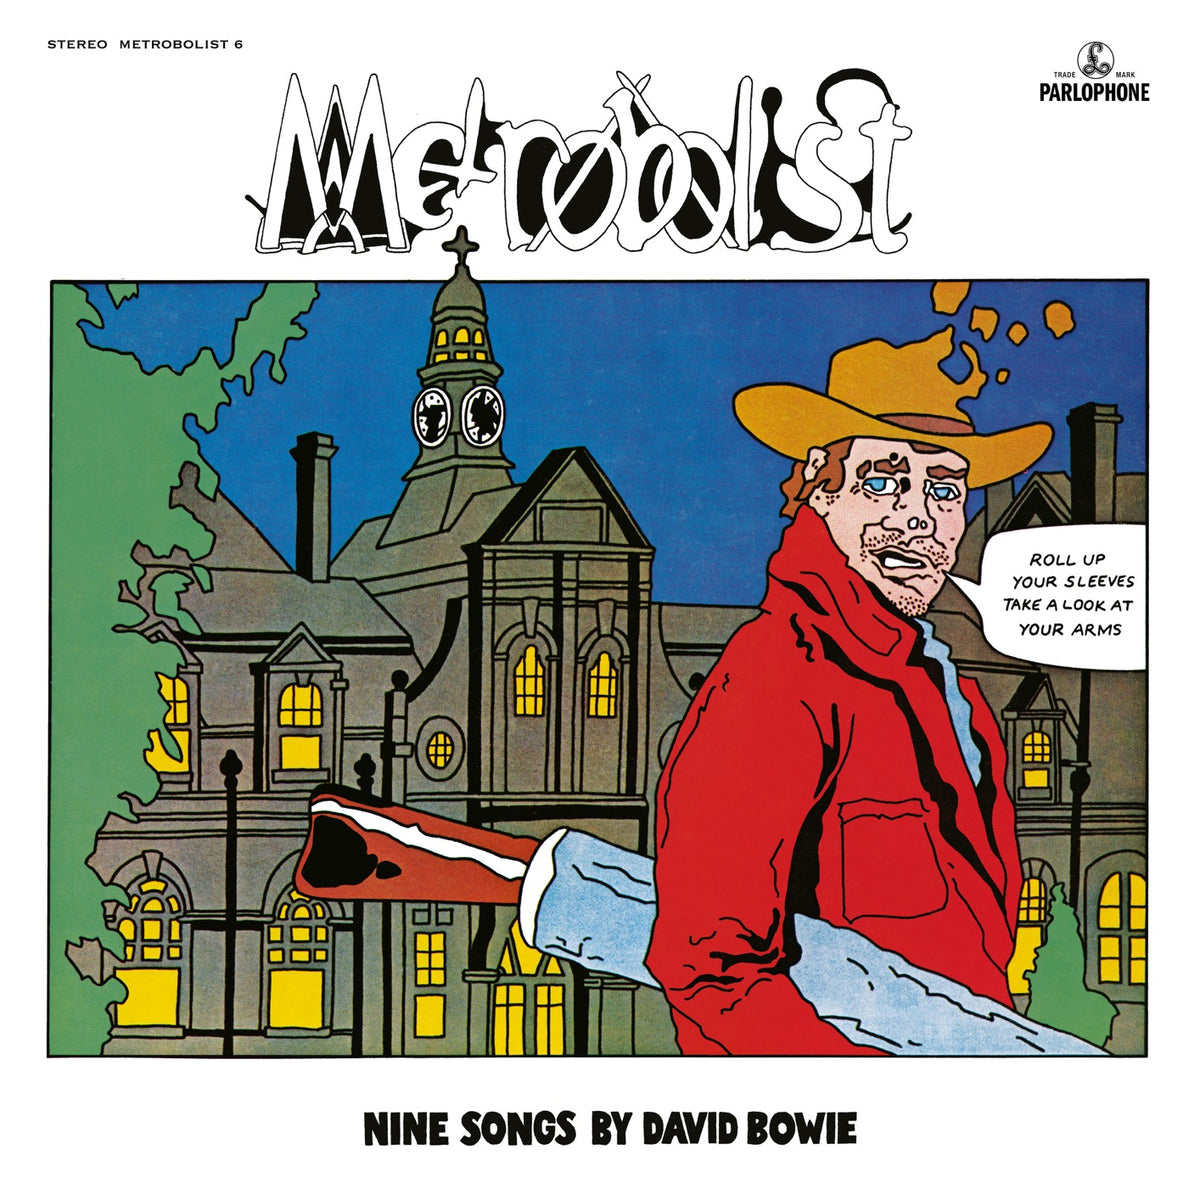 David Bowie - Metrobolist (AKA The Man Who Sold The World)